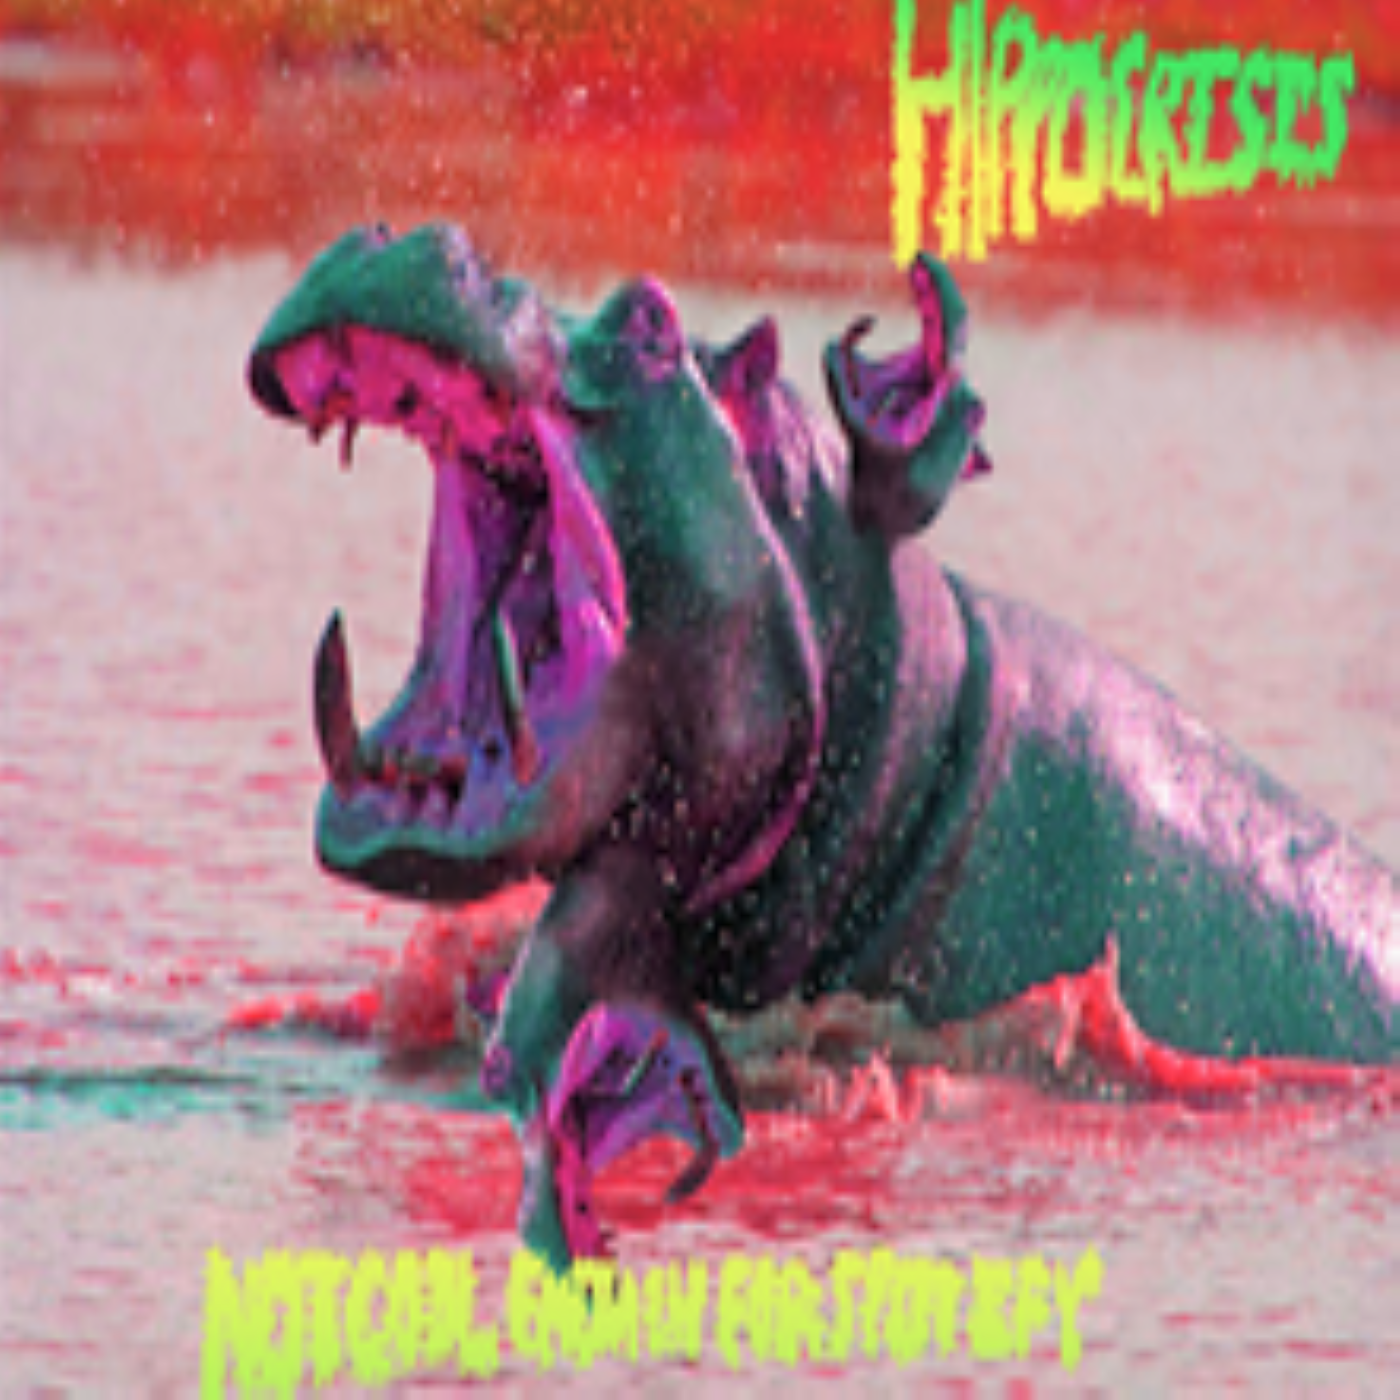 Full color image of Hippocrisis album cover including an actual hippopotamus